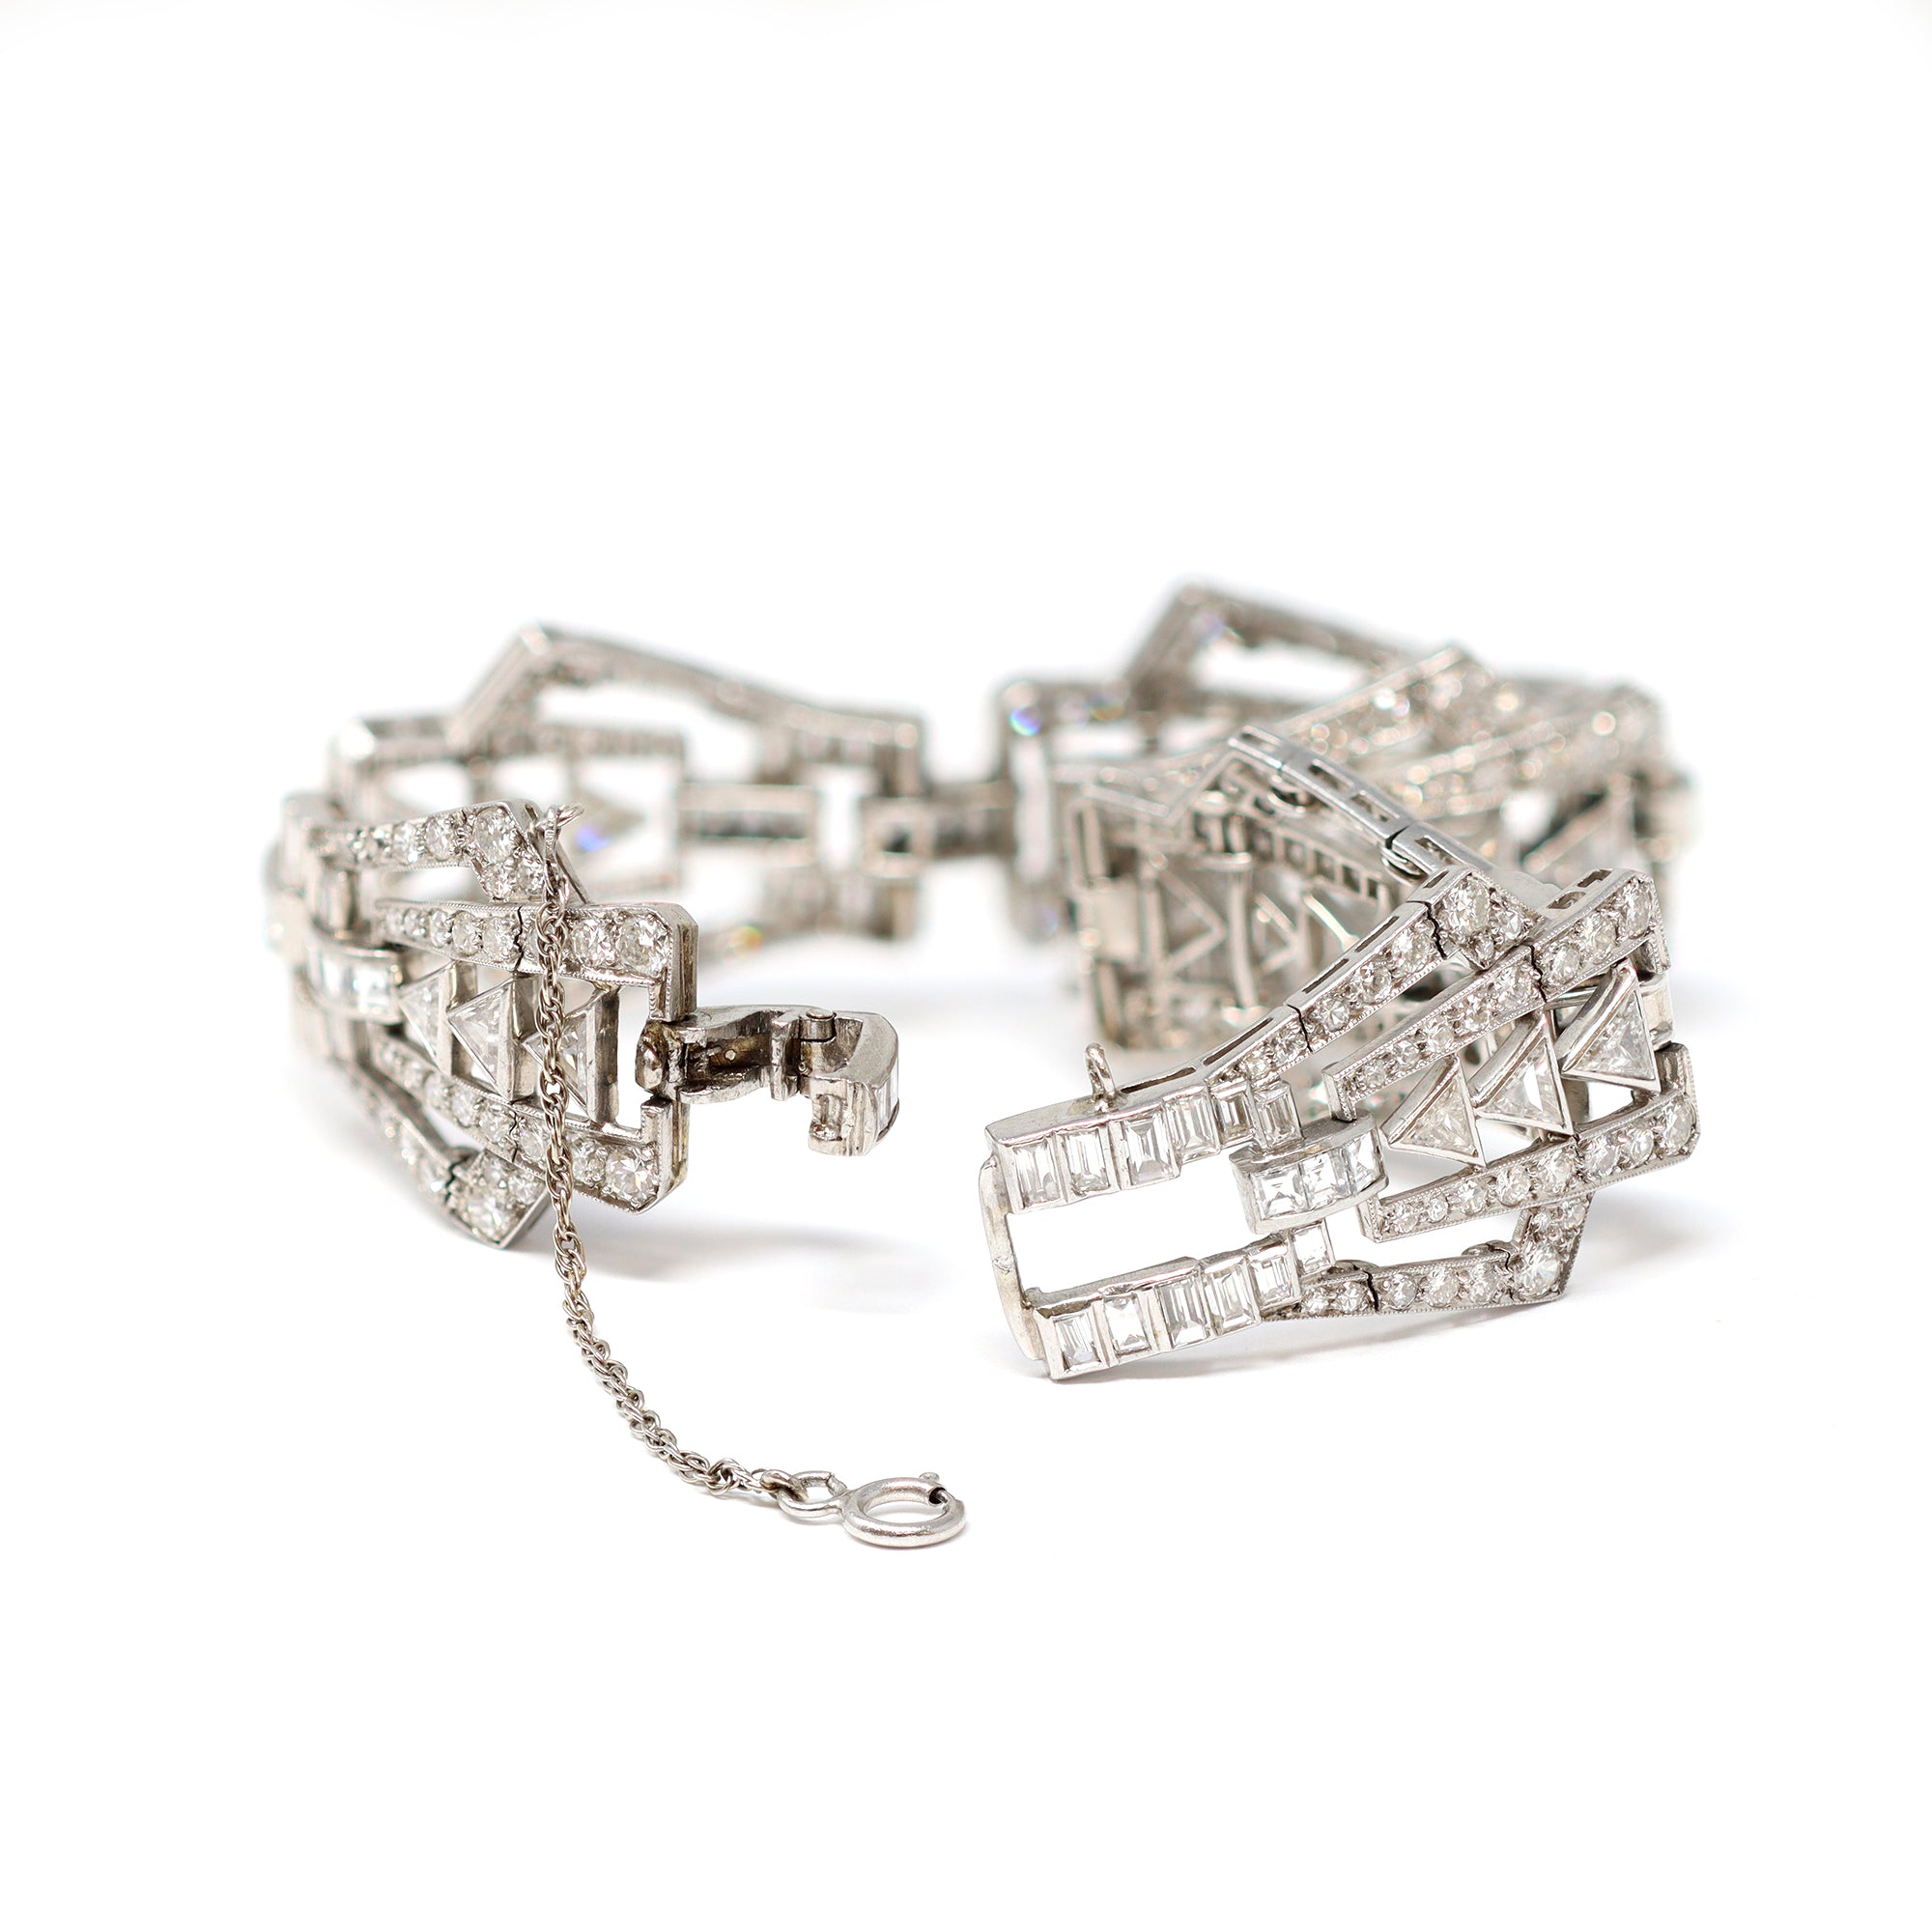 Cartier 'Love' White Gold Diamond and Ceramic Bracelet – CIRCA